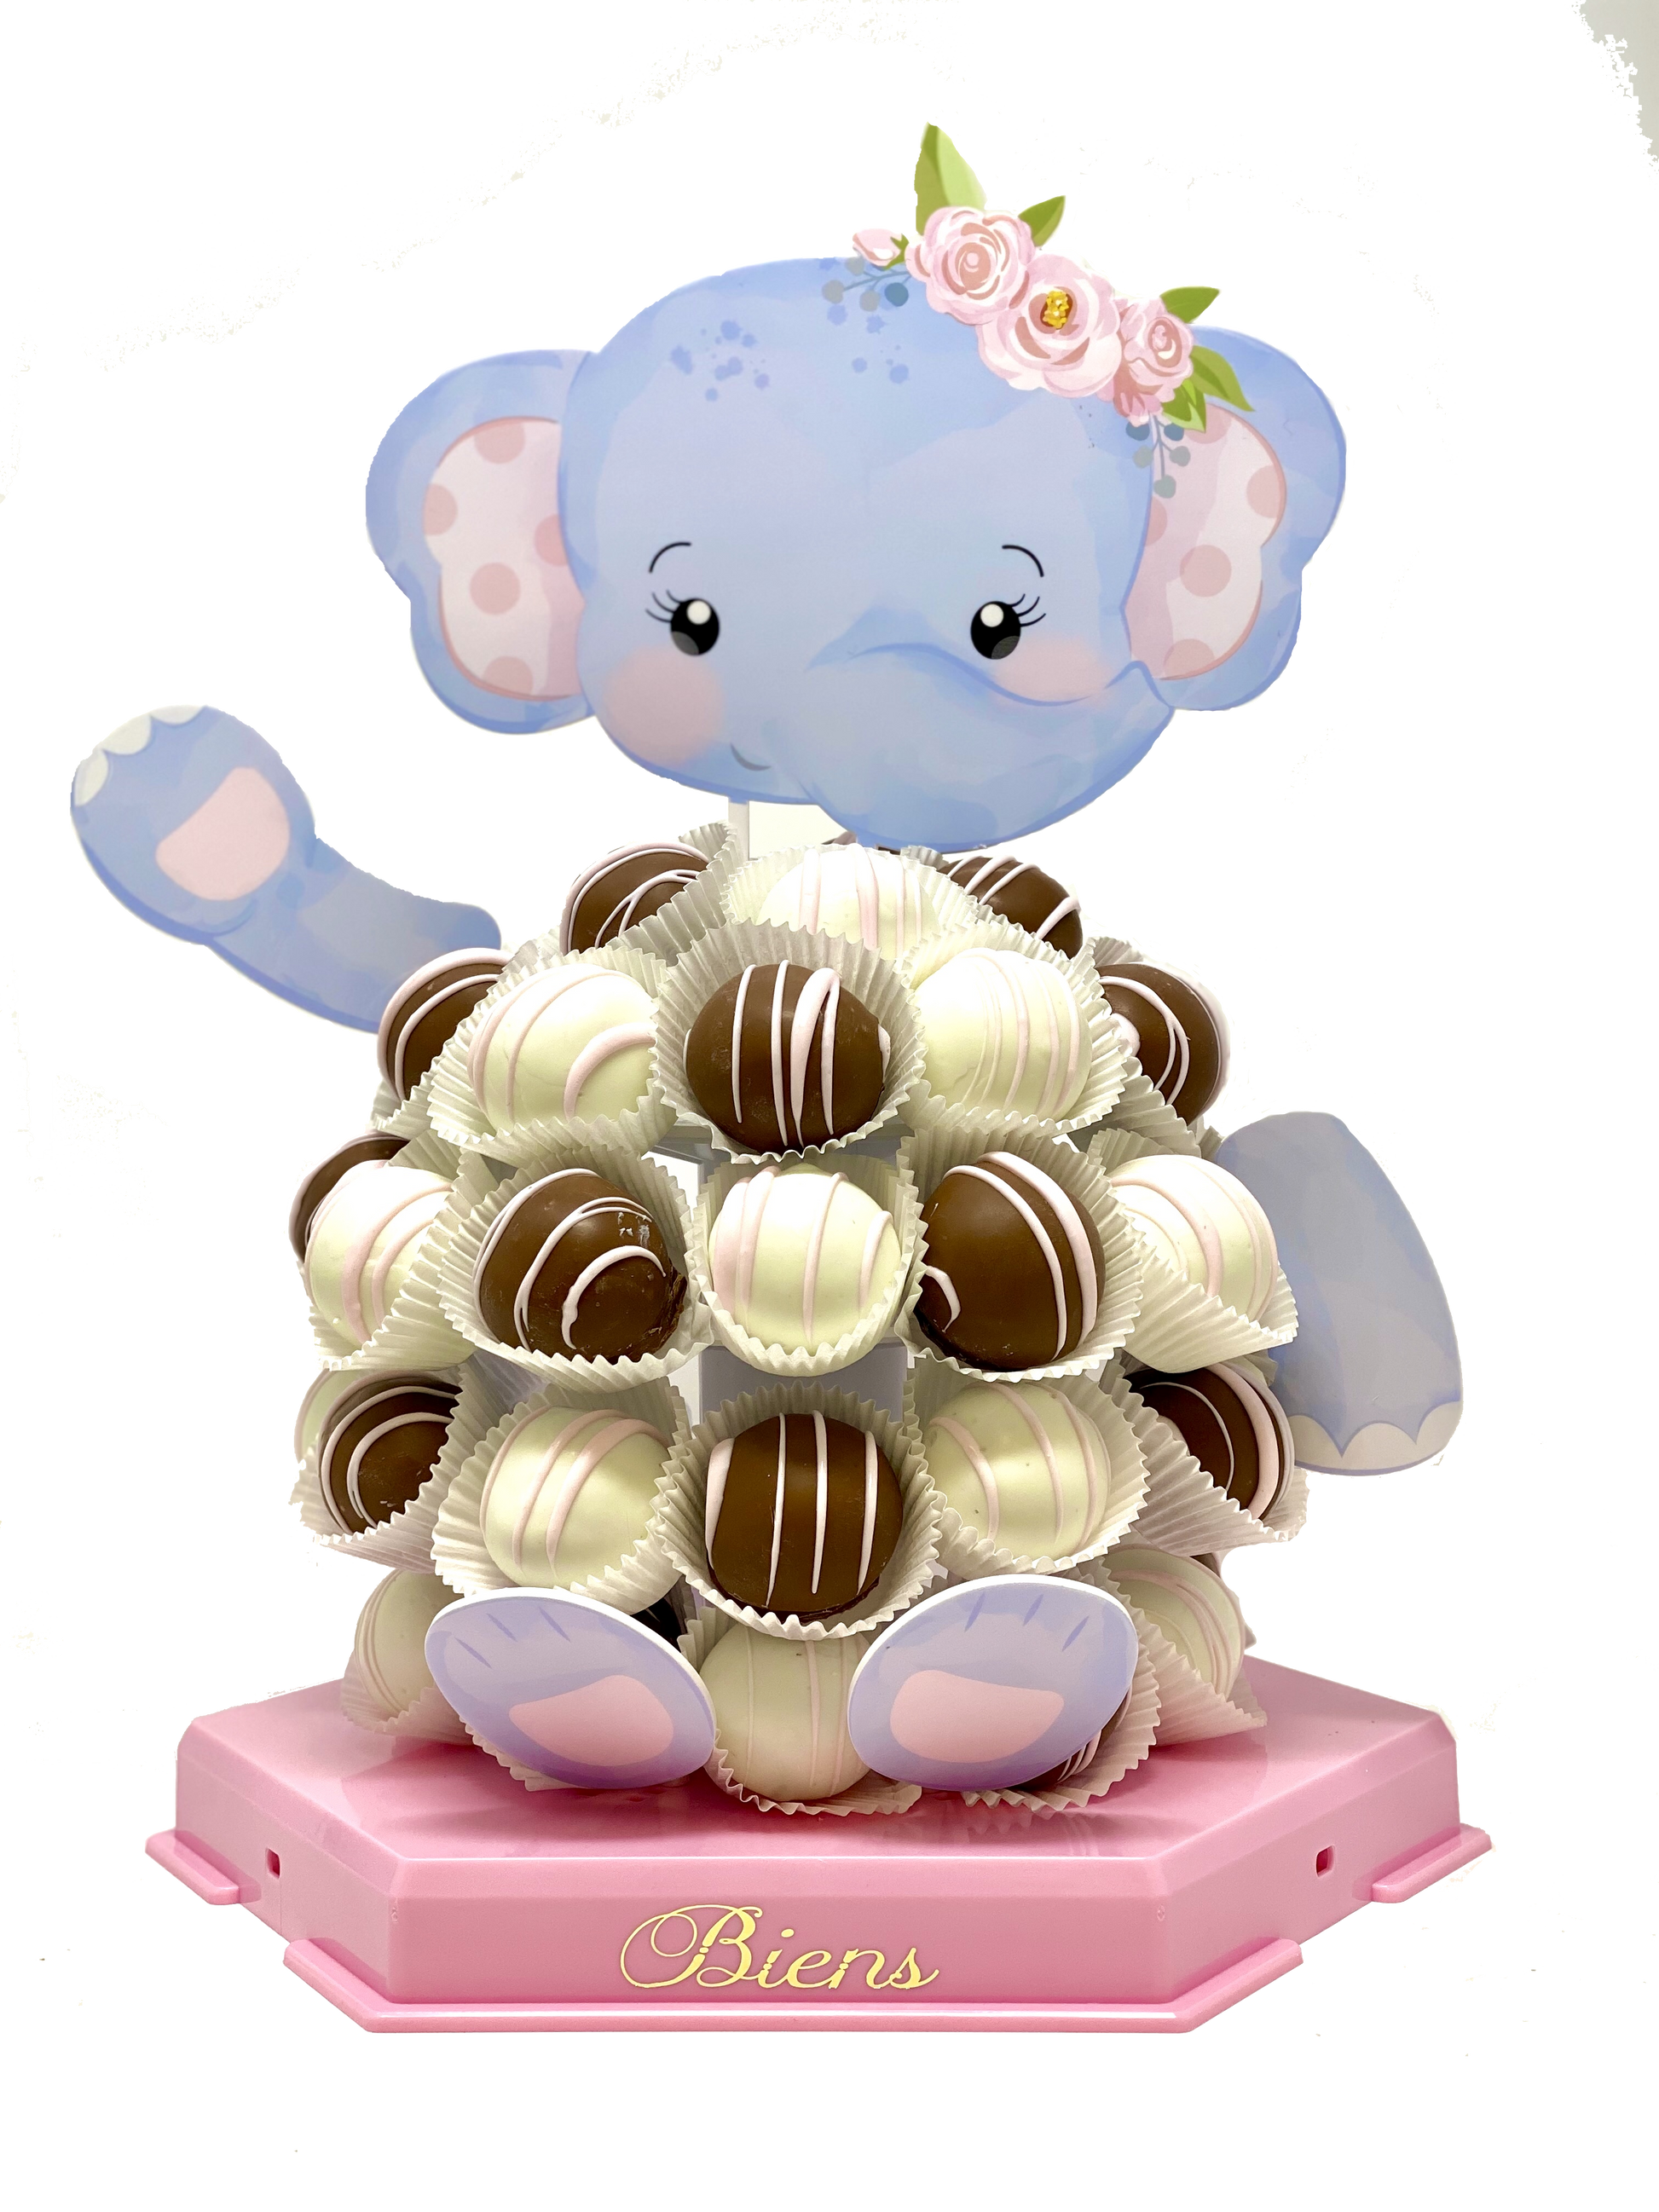 Ellie Tusk- The Elephant Biens Chocolate Centerpiece - The Dessert Ladies